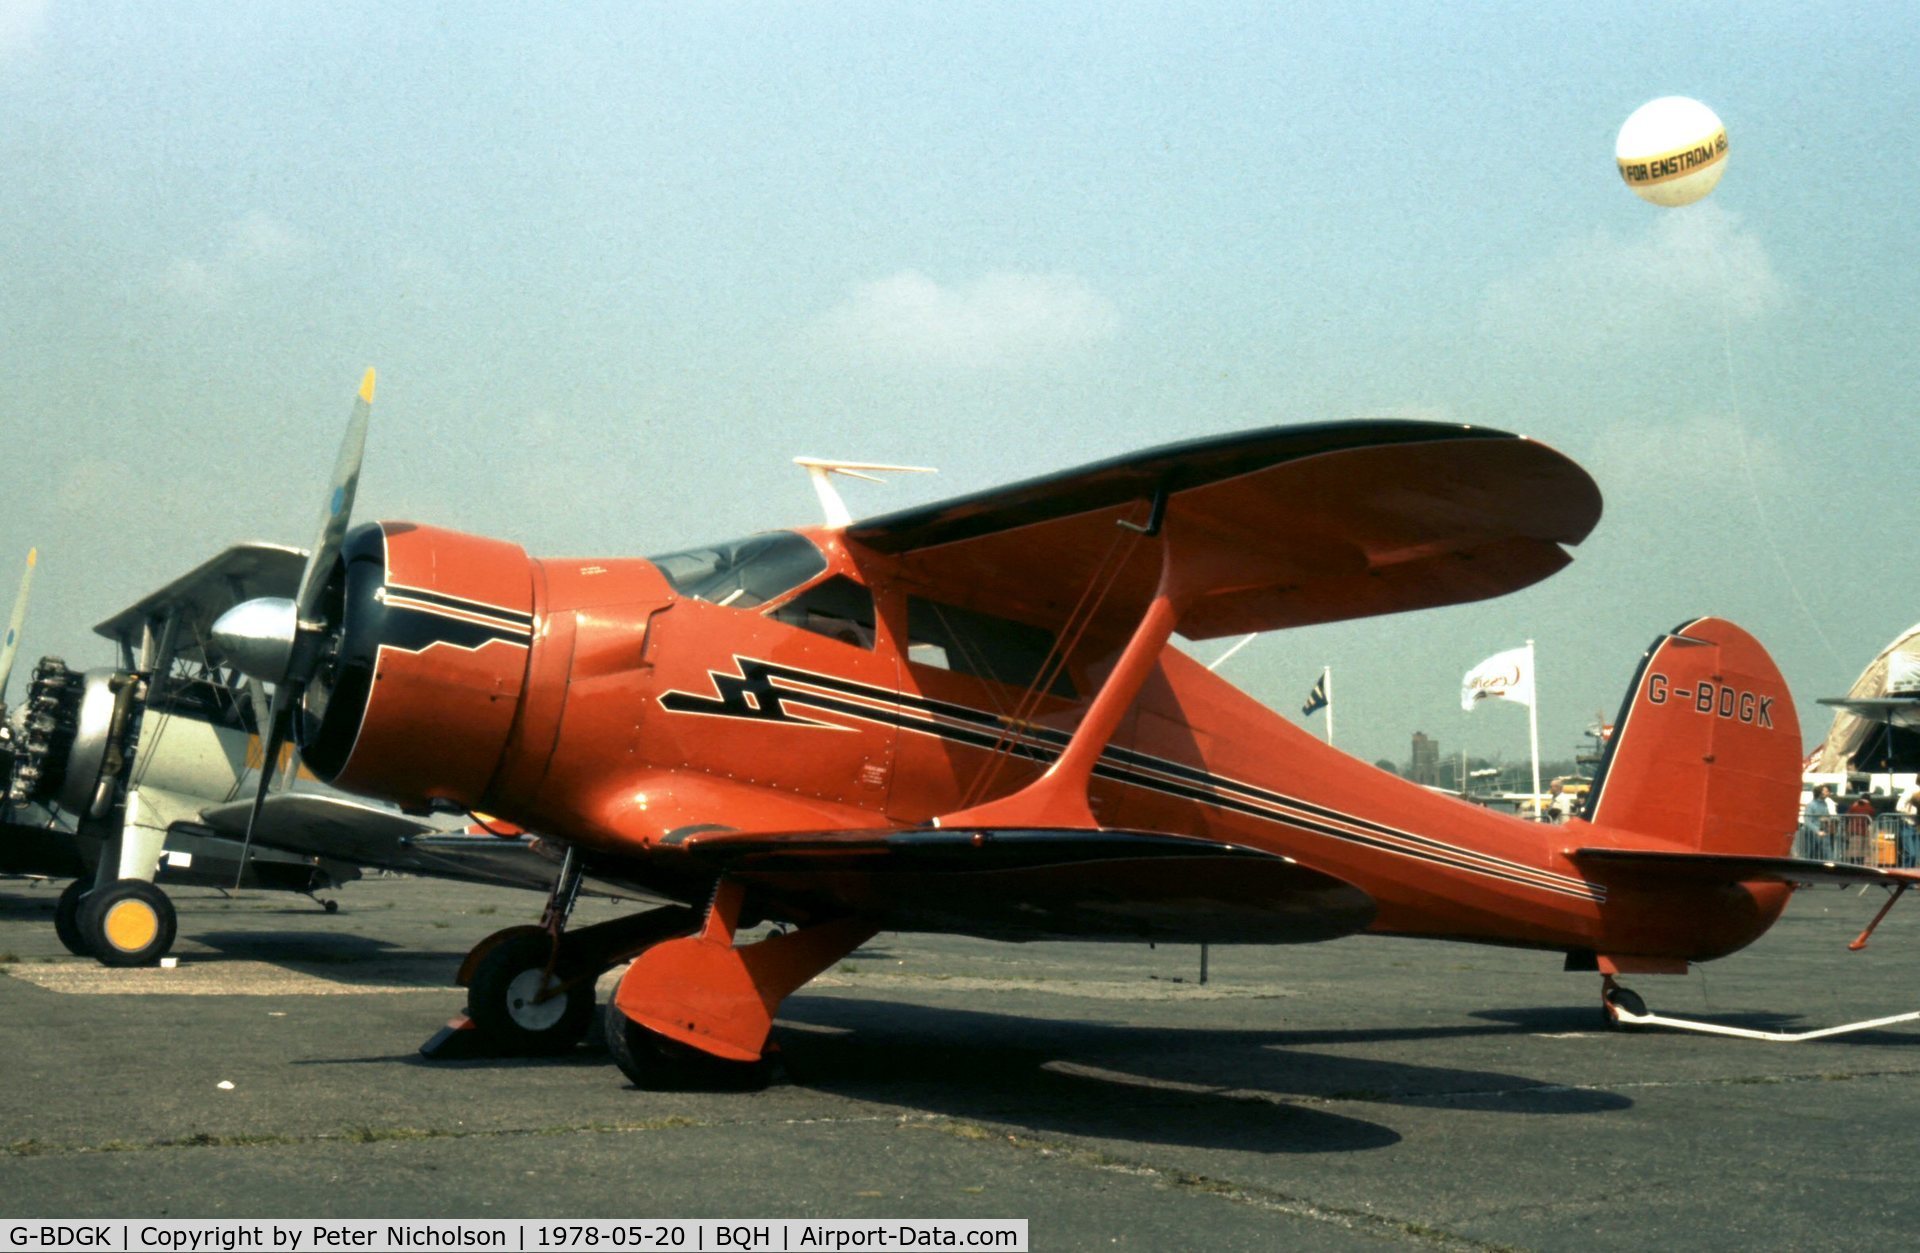 G-BDGK, 1941 Beech UC-43 Traveler C/N 4920, Beech Staggerwing on display at the 1978 Biggin Hill Air Fair.